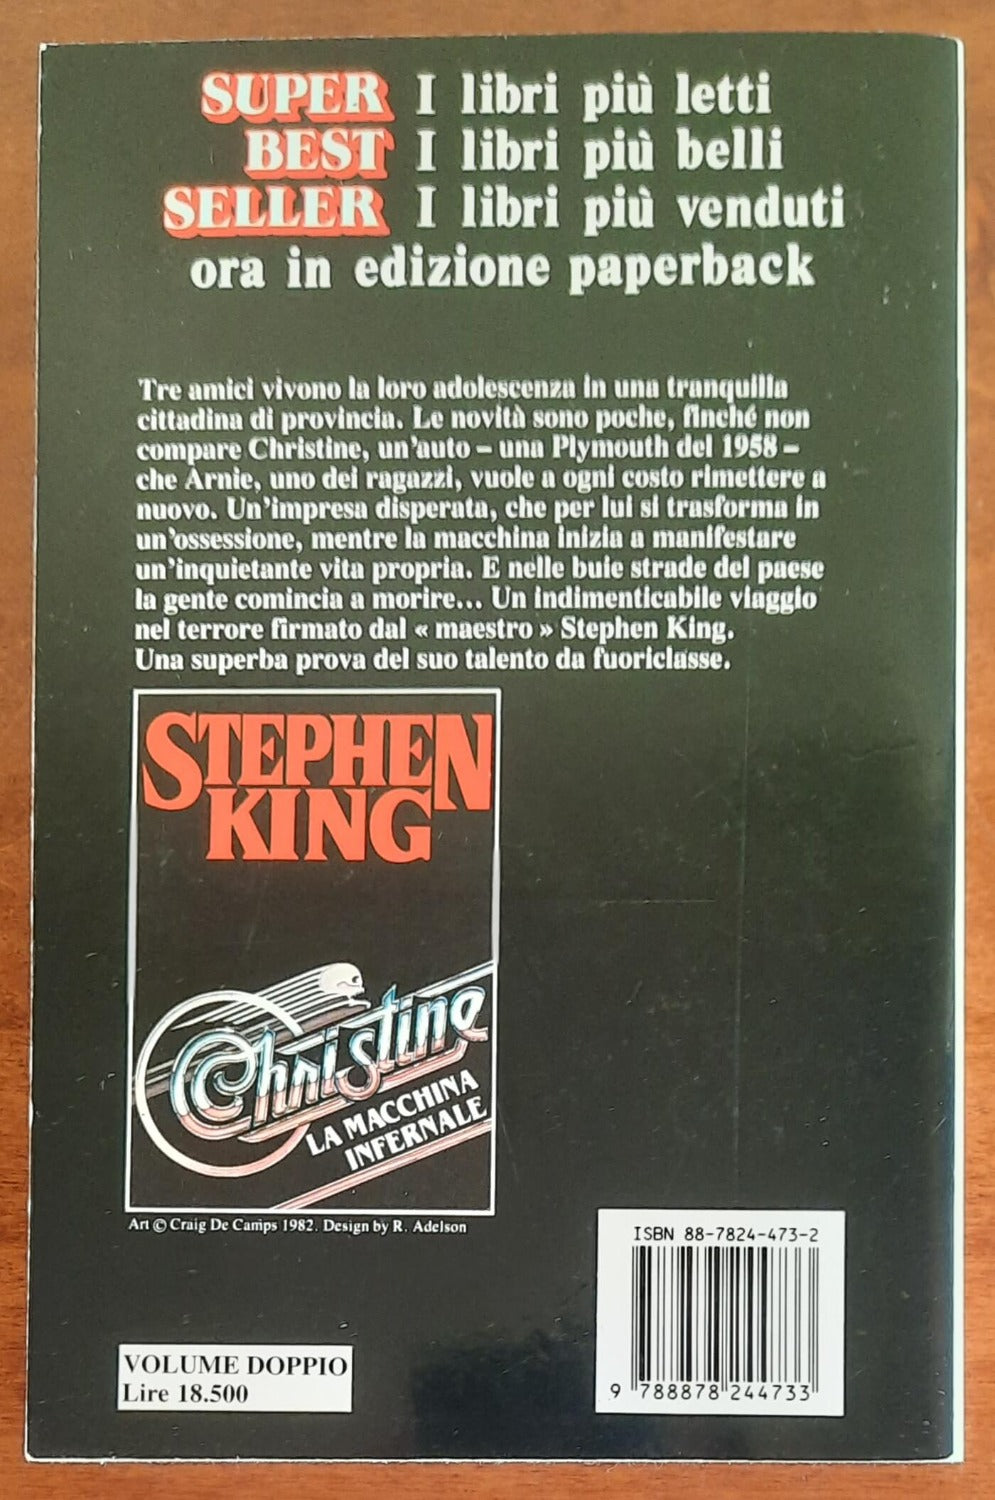 Christine. La macchina infernale - di Stephen King